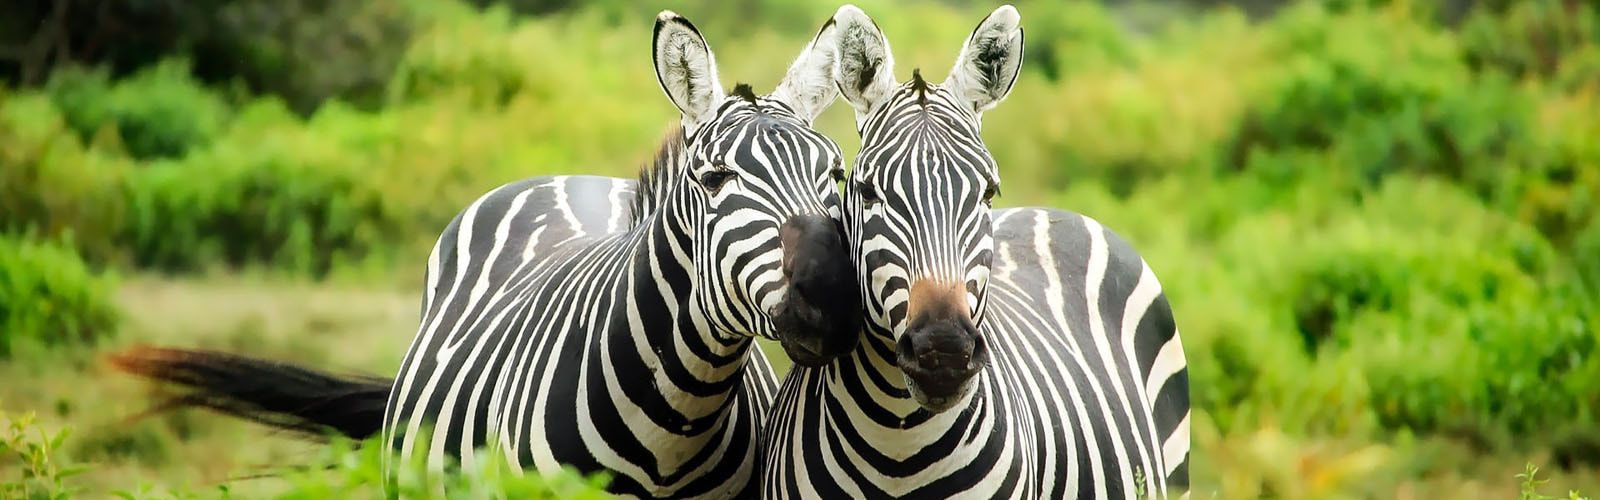 africa-animals-conservation-247376_orig.jpg